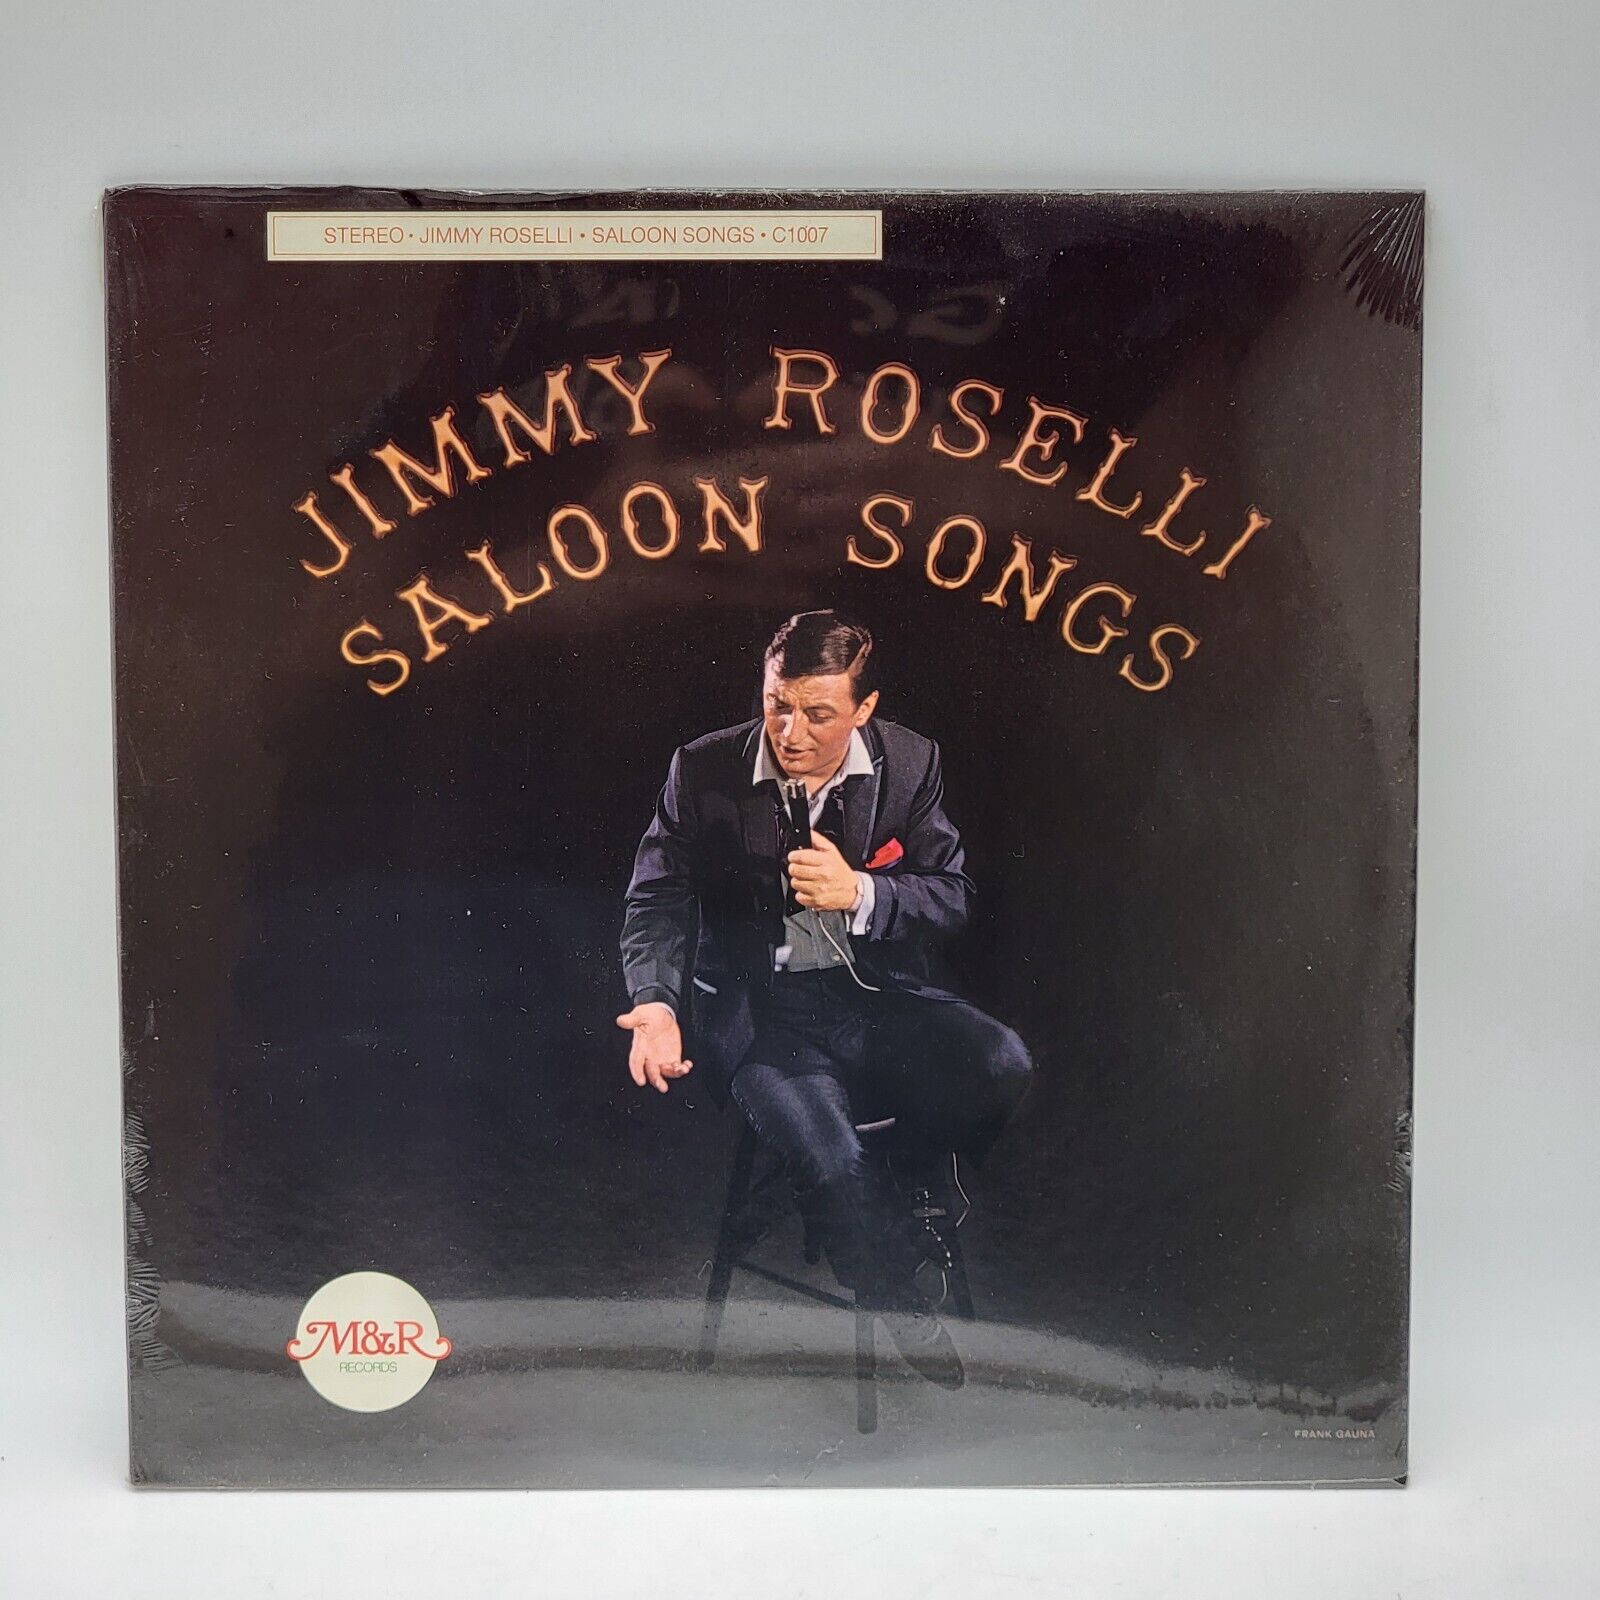 Vintage M & R Records C1007 1965 Jimmy Roselli Saloon Songs Vinyl Record